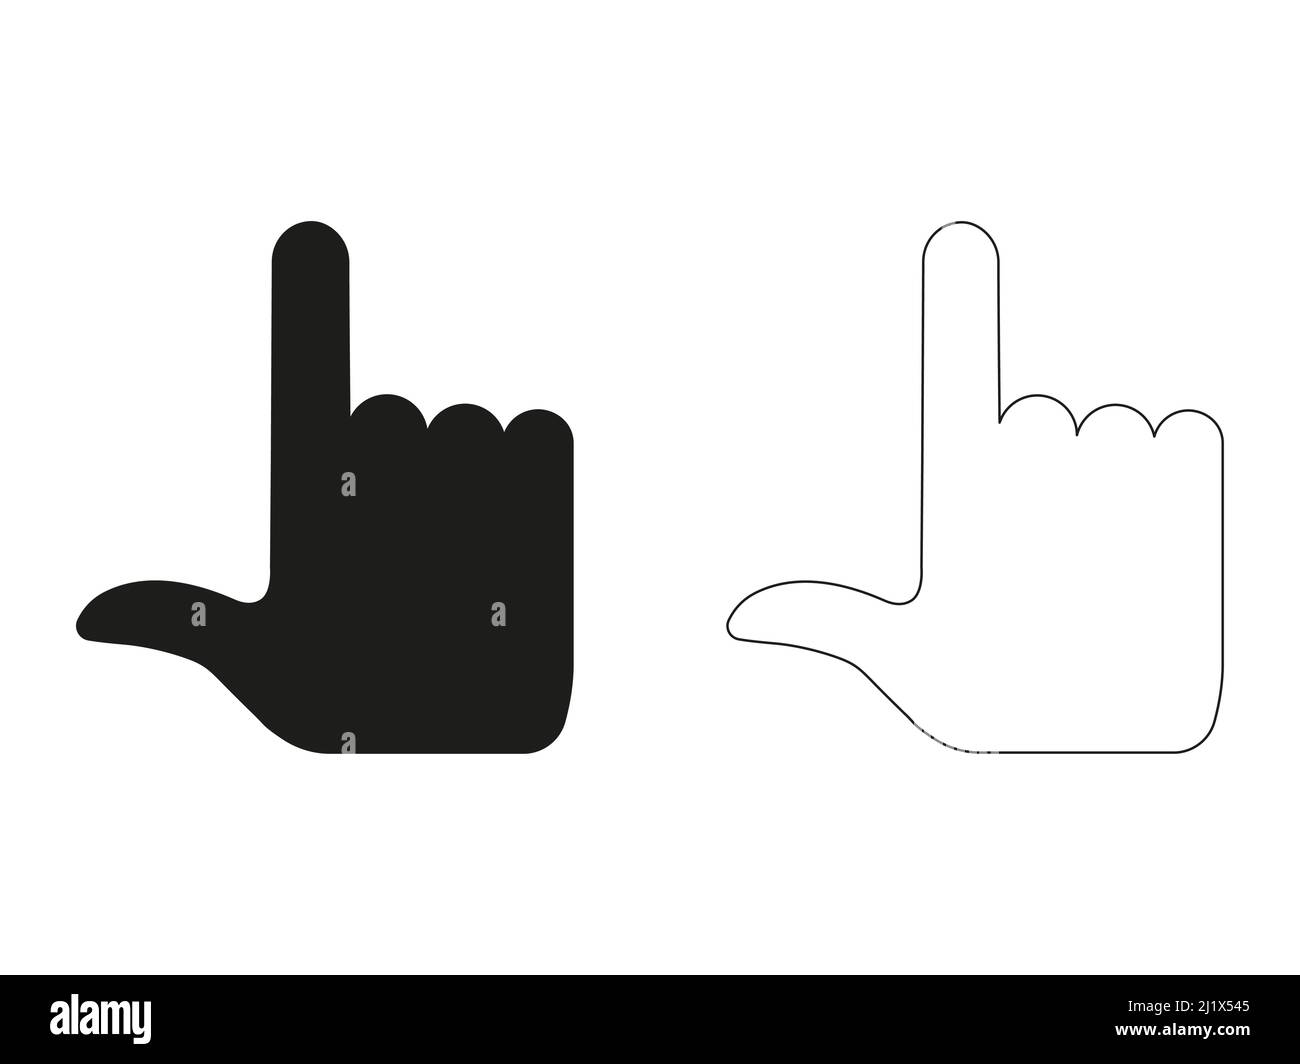 Finger pointer symbol. Hand line icon. Black arm gesture silhouette. Stock Vector